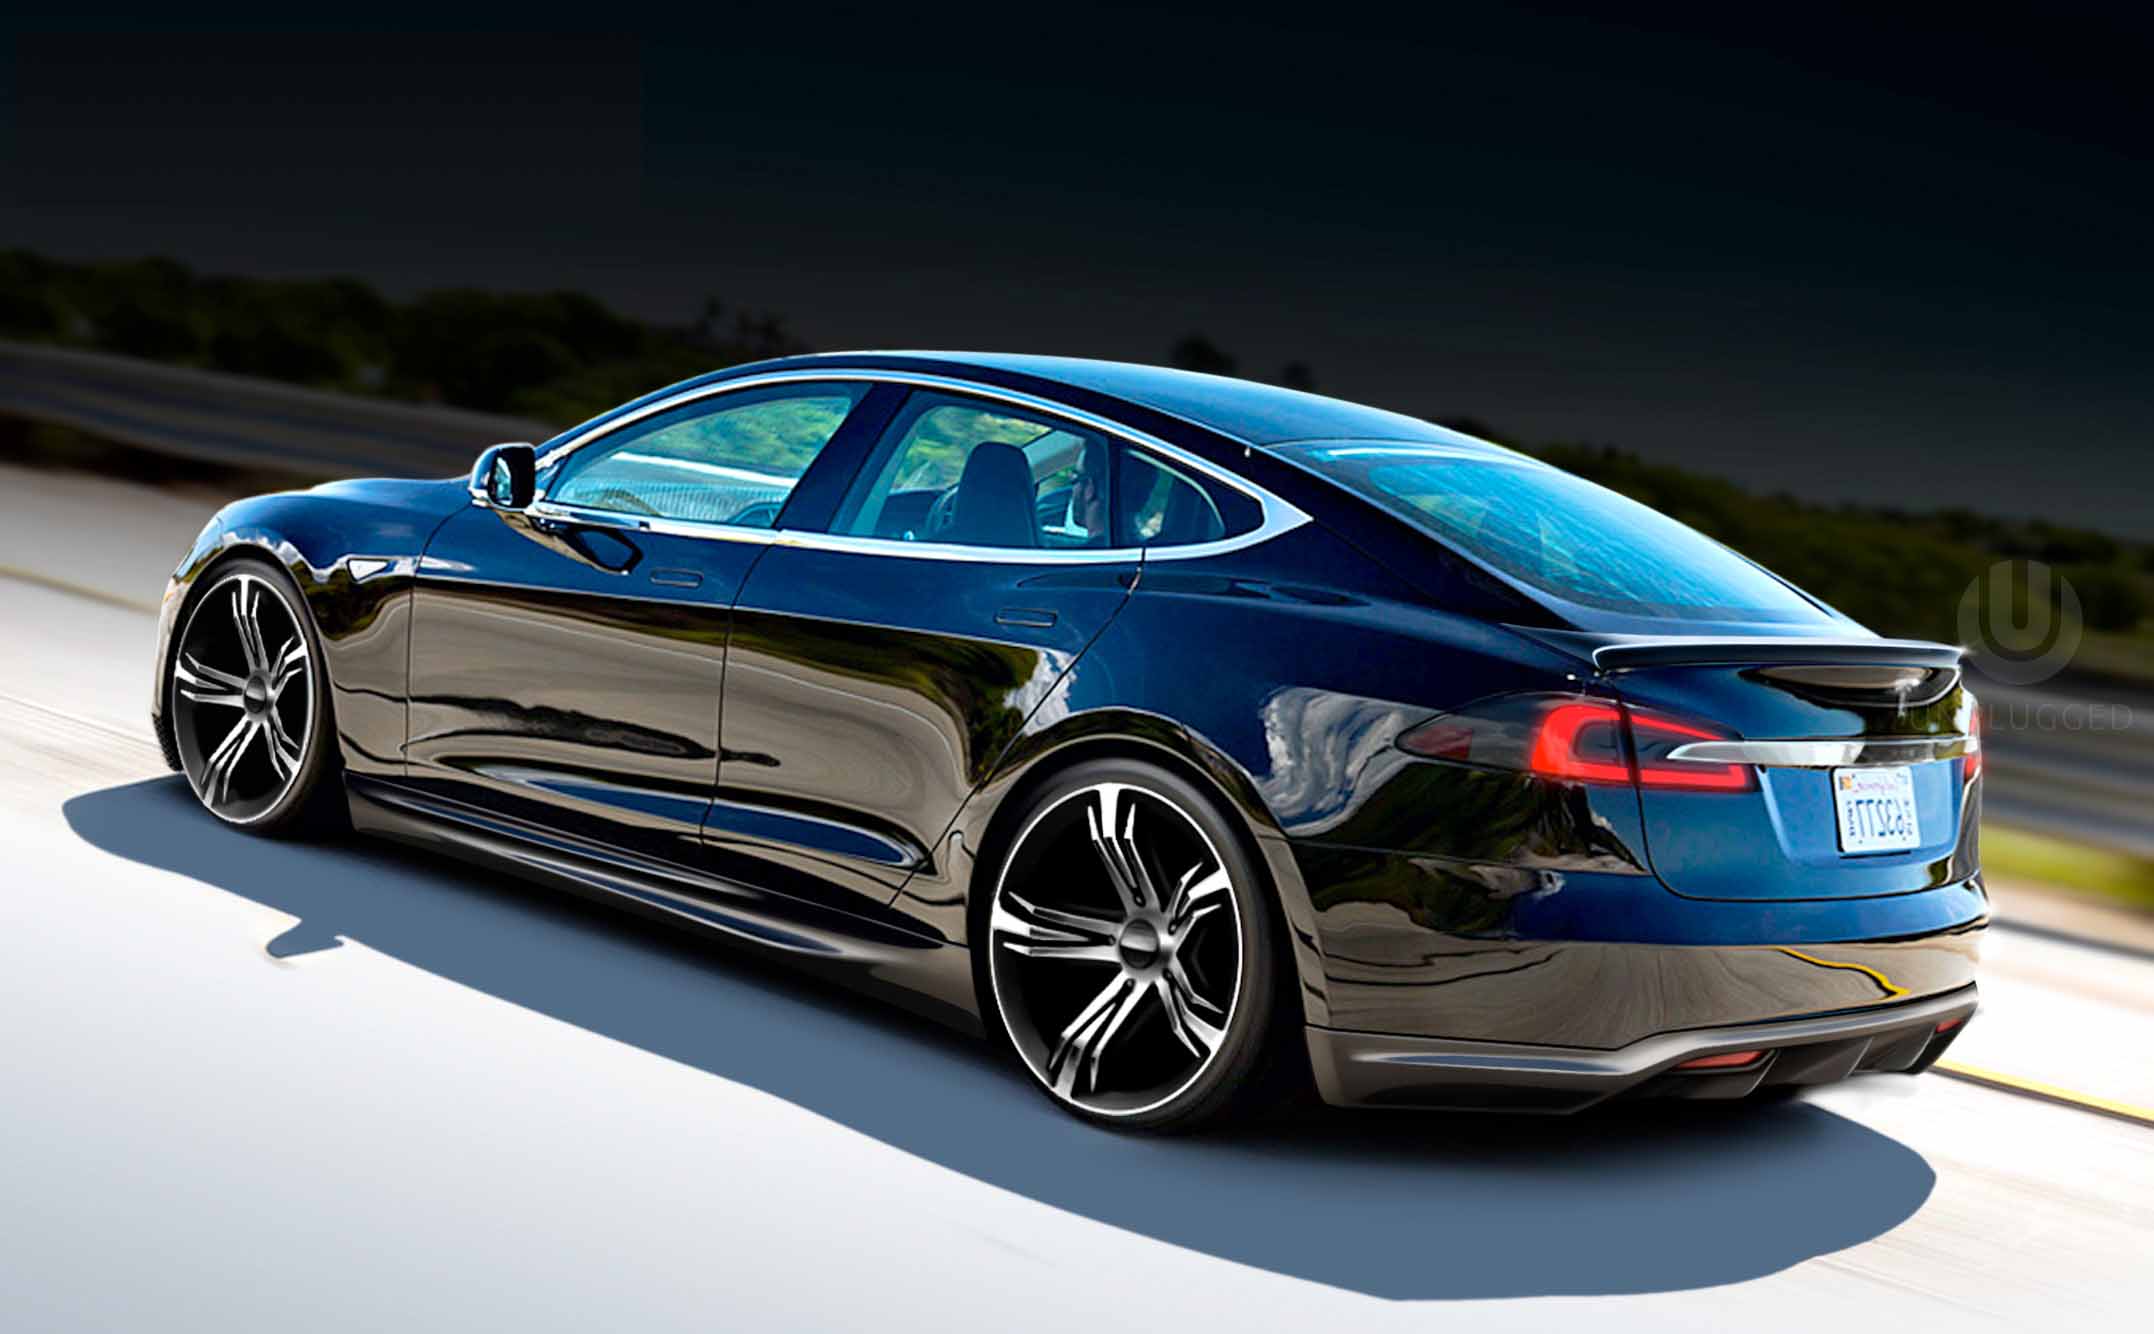 Tesla Model S Latest HD Wallpapers Free Download | New HD ...